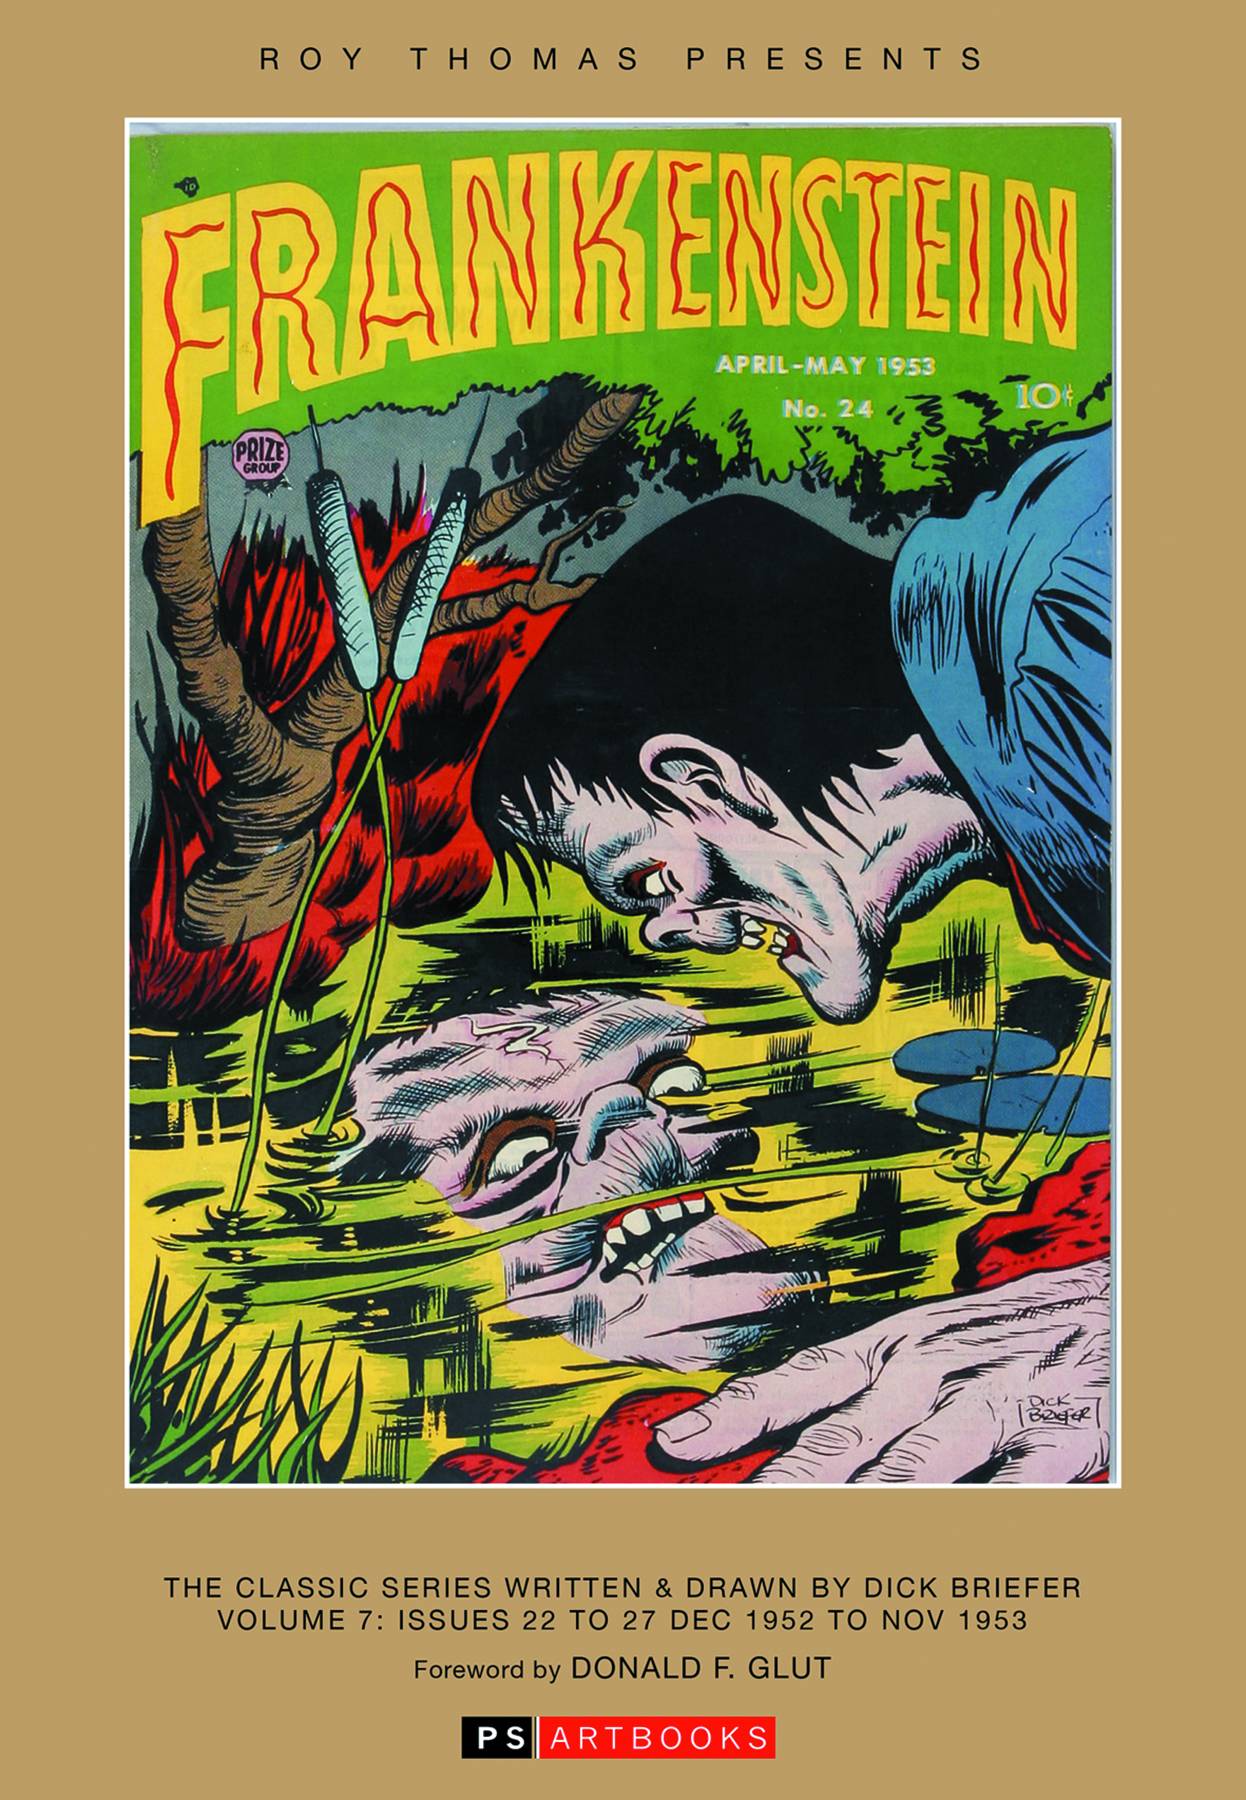 Roy Thomas Presents Briefer Frankenstein Hardcover 1952-53